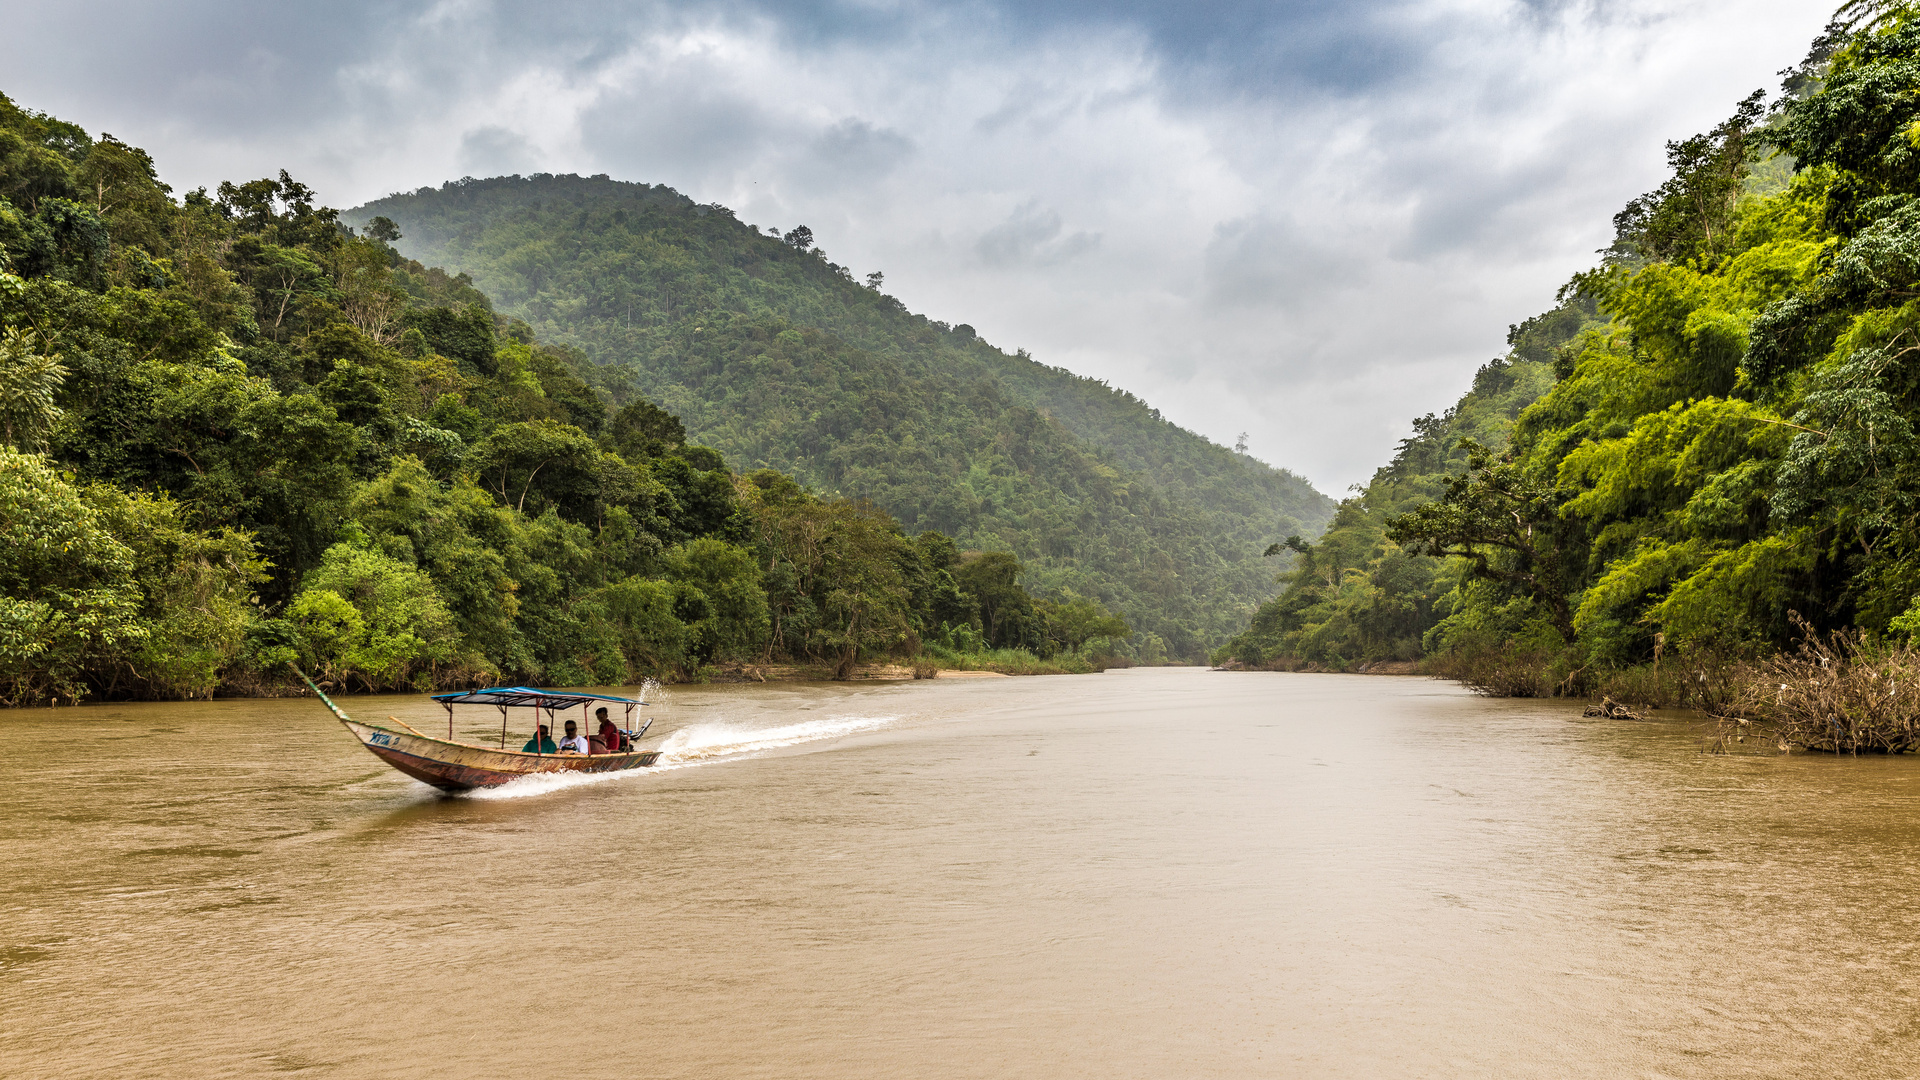 Longboat on the Mekong River